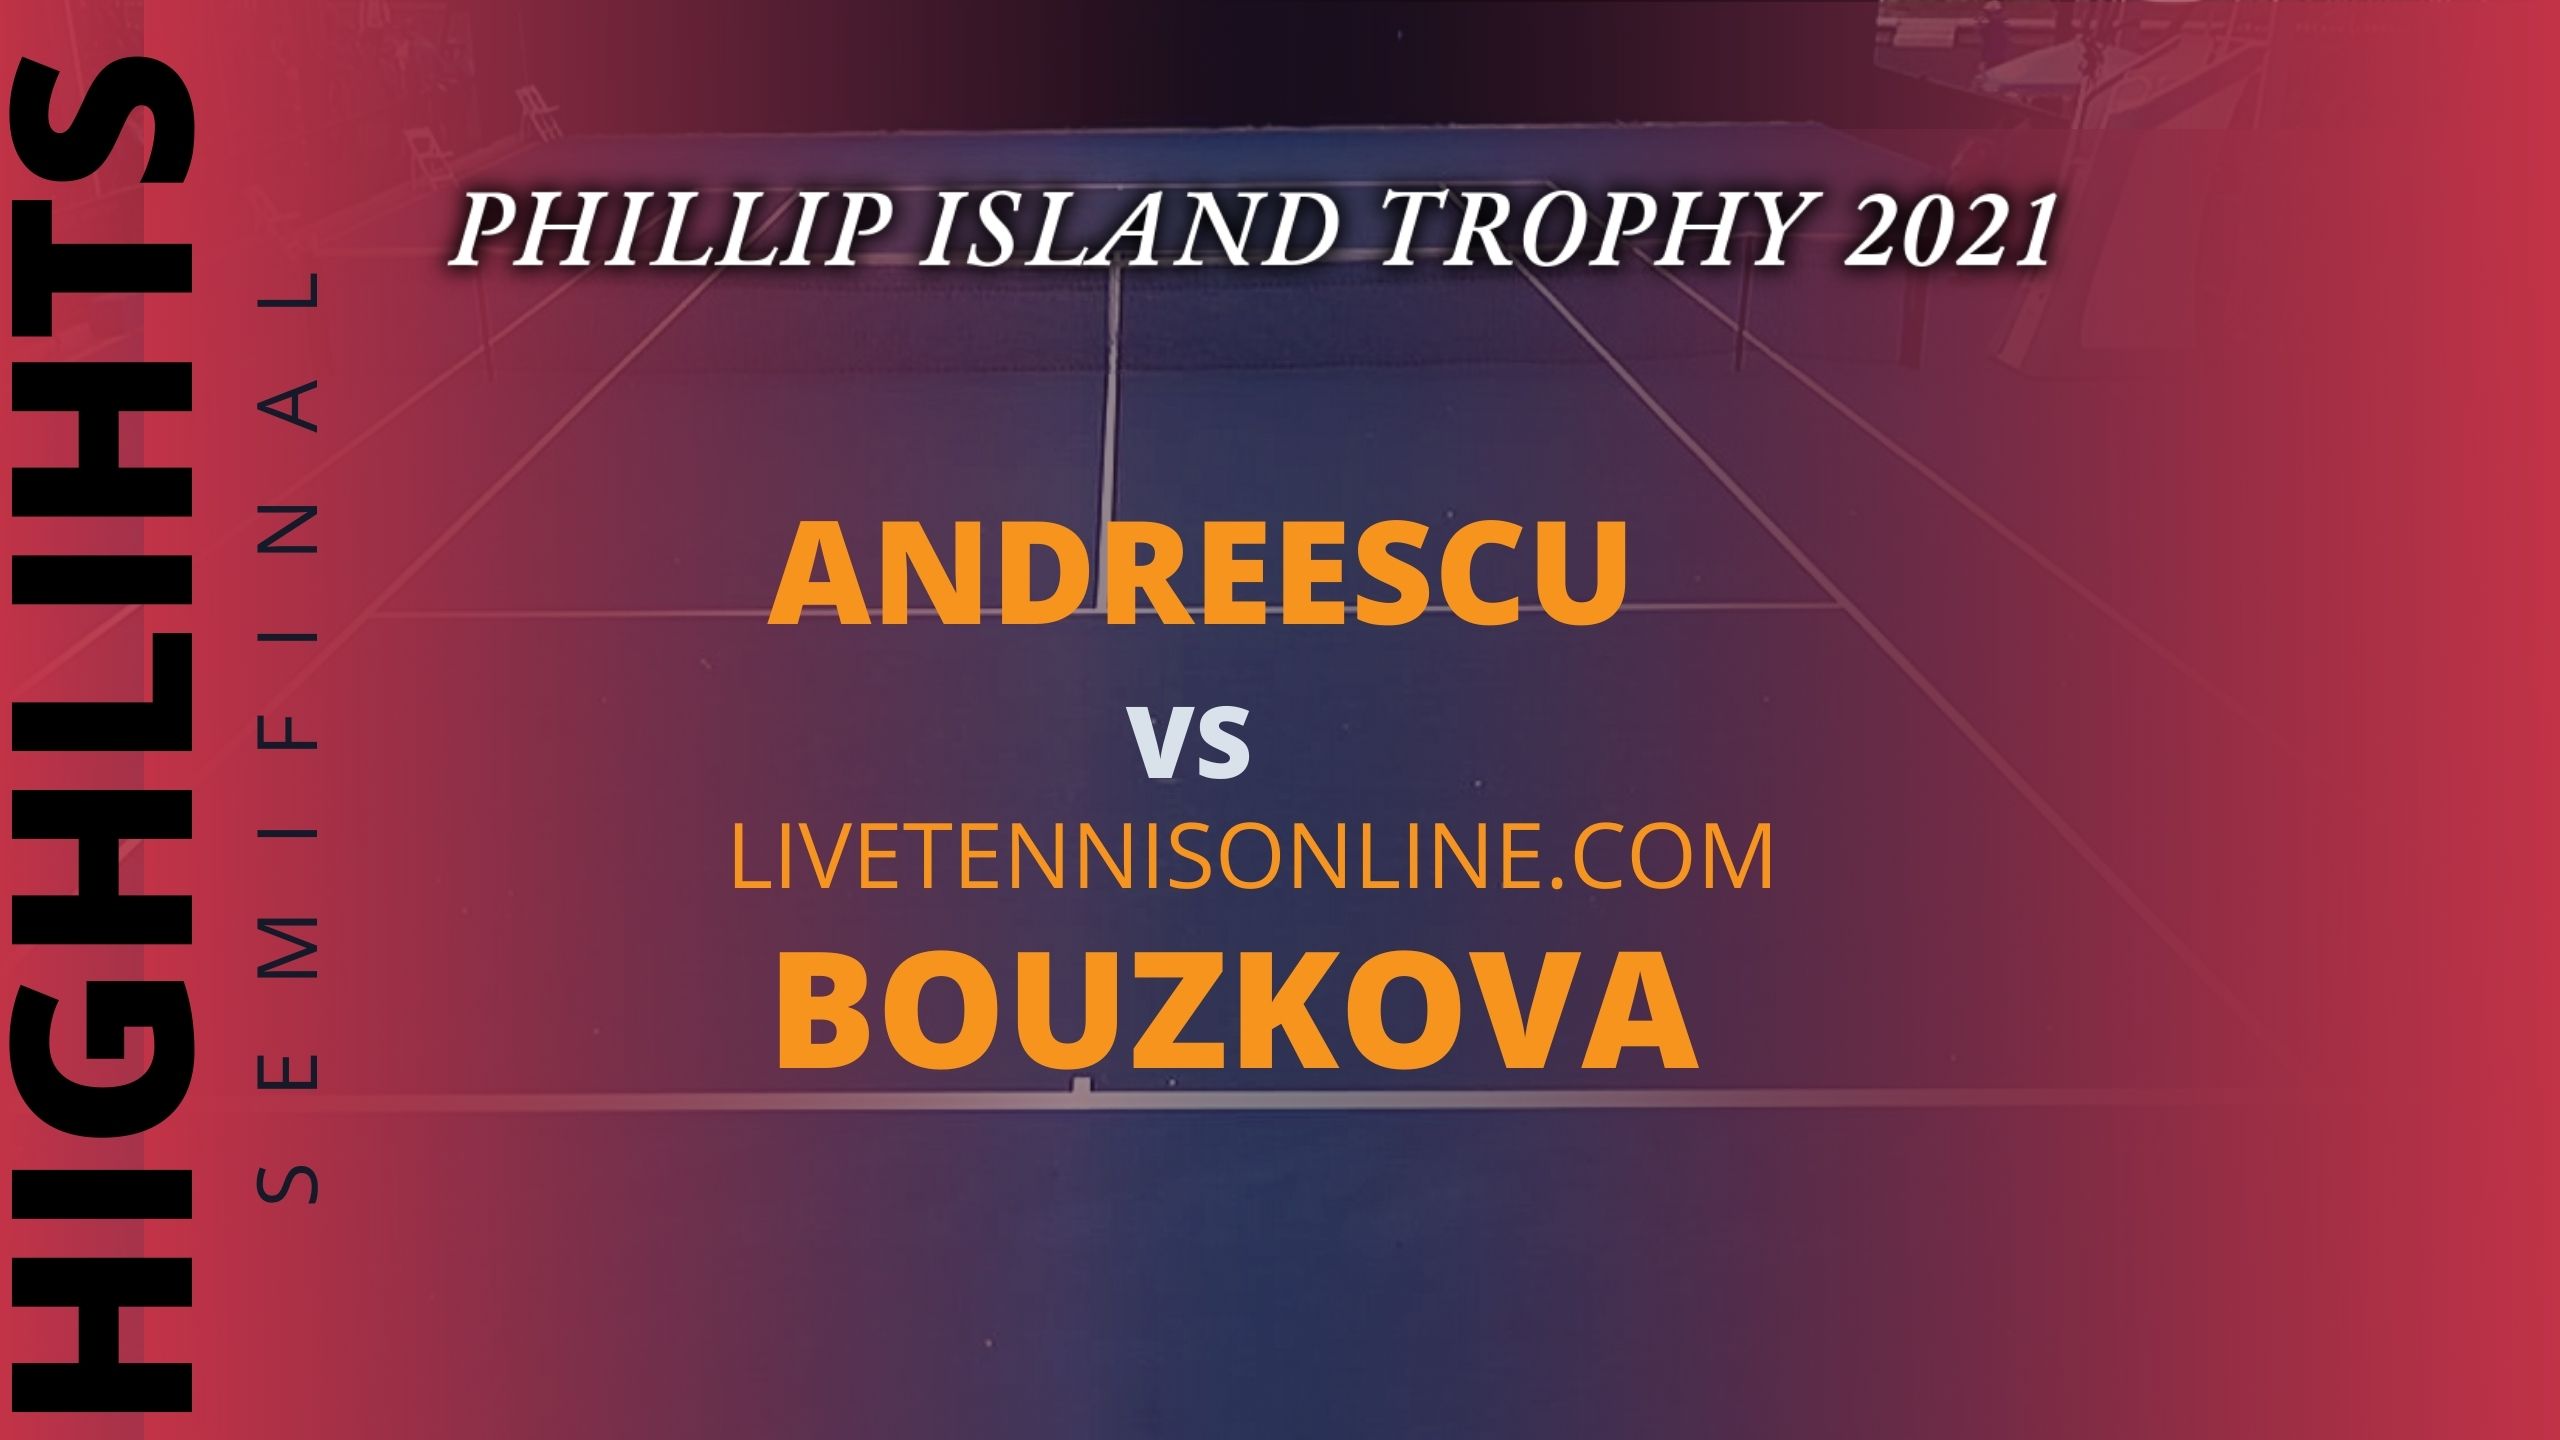 Bouzkova Vs Andresscu SF Highlights 2021